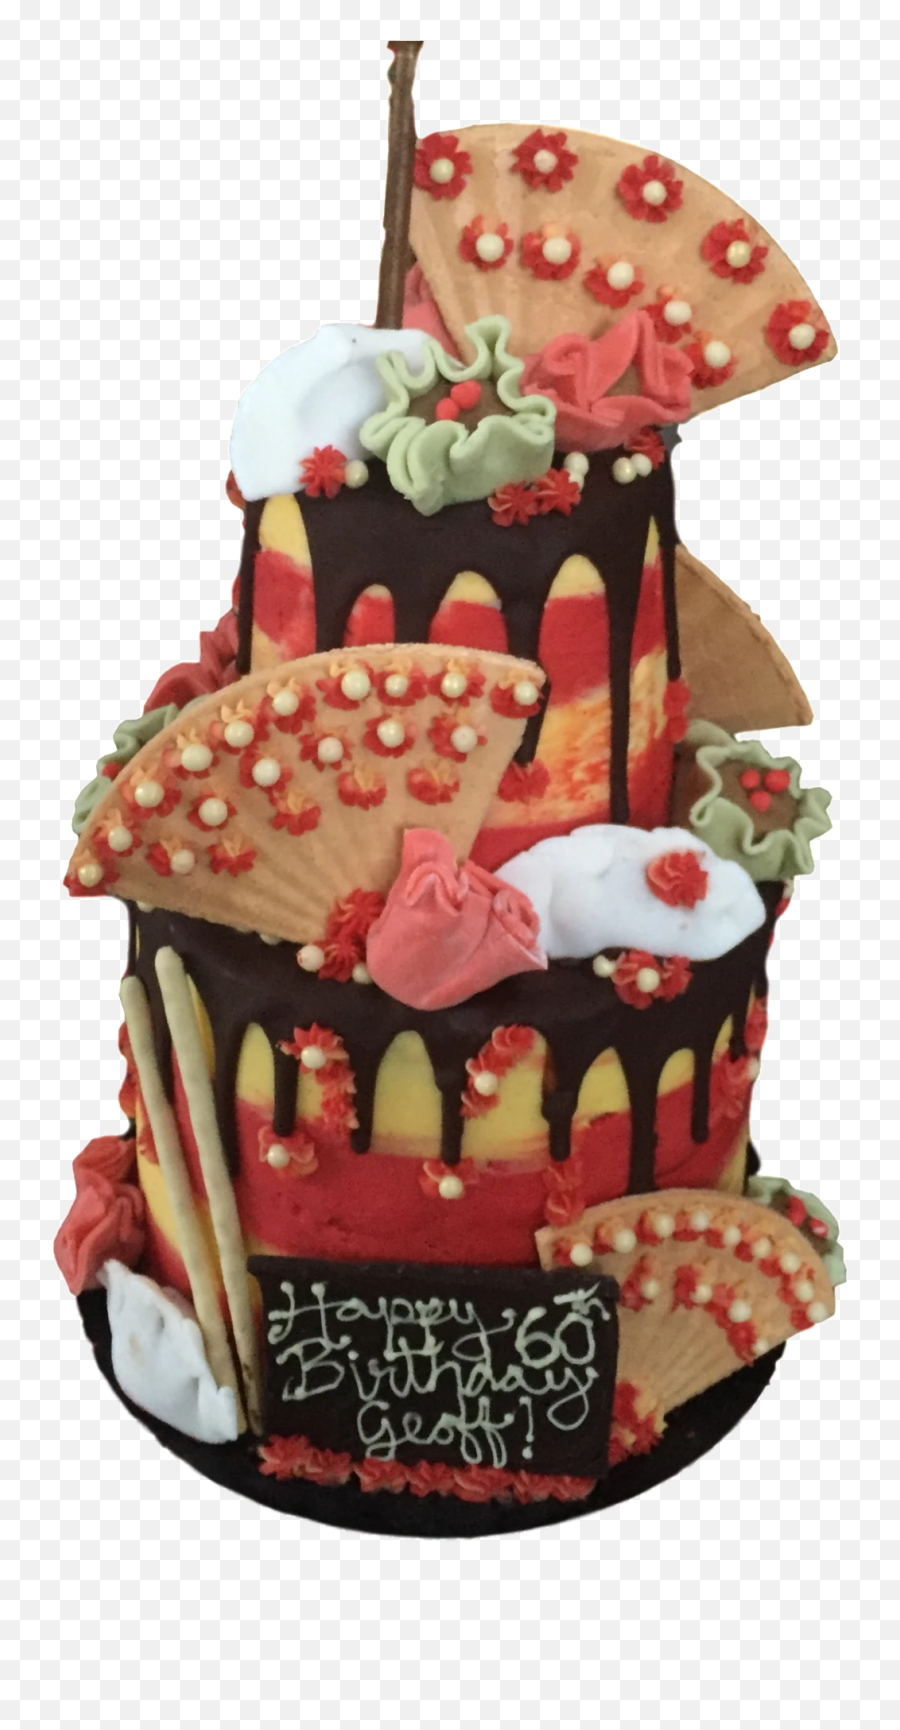 Dim Sum Red Velvet Brownie Cake - Cake Decorating Emoji,How To Make An Emoji Cake